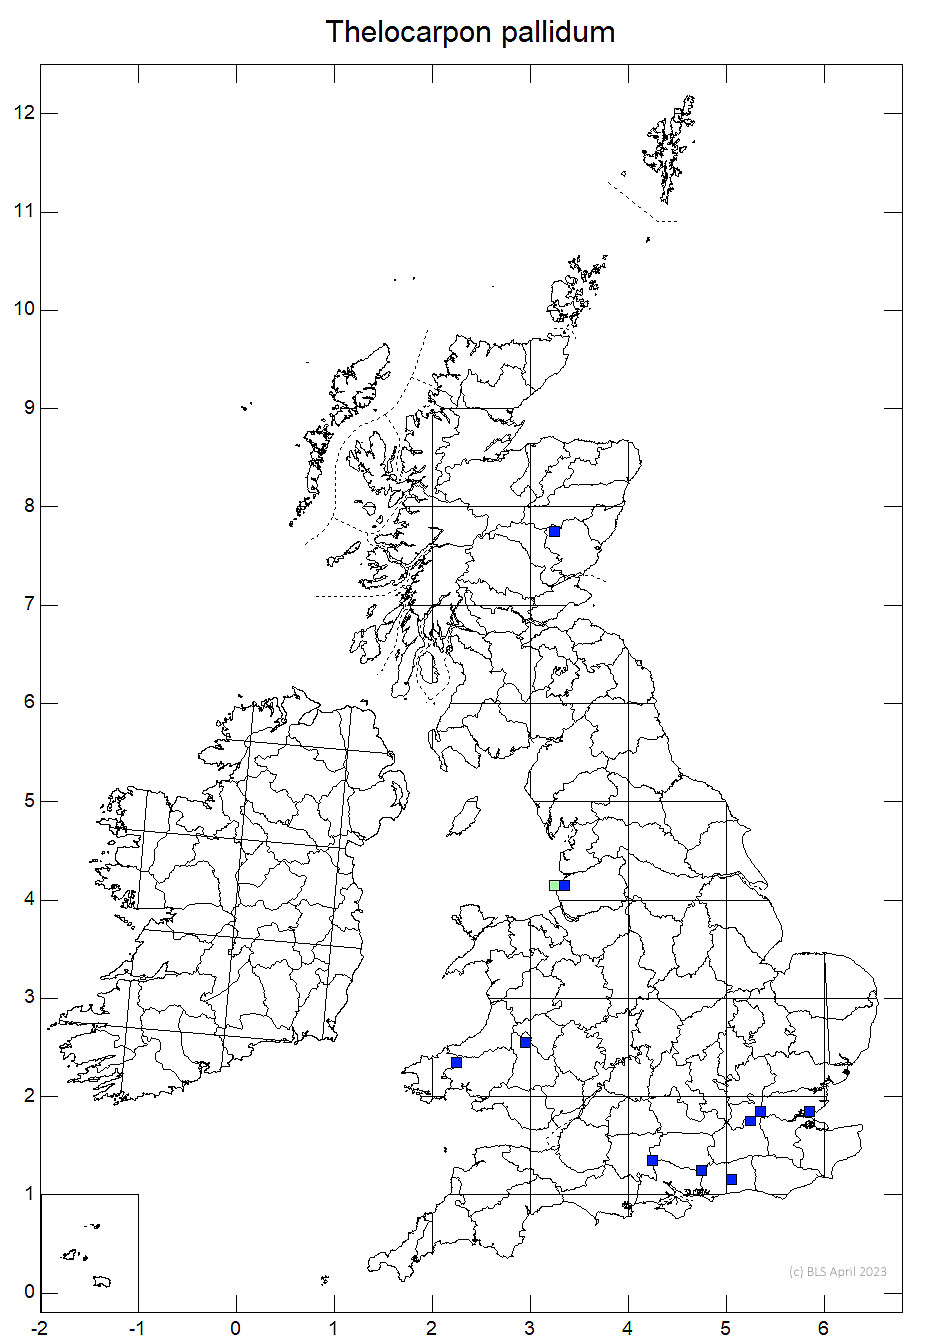 Thelocarpon pallidum 10km sq distribution map